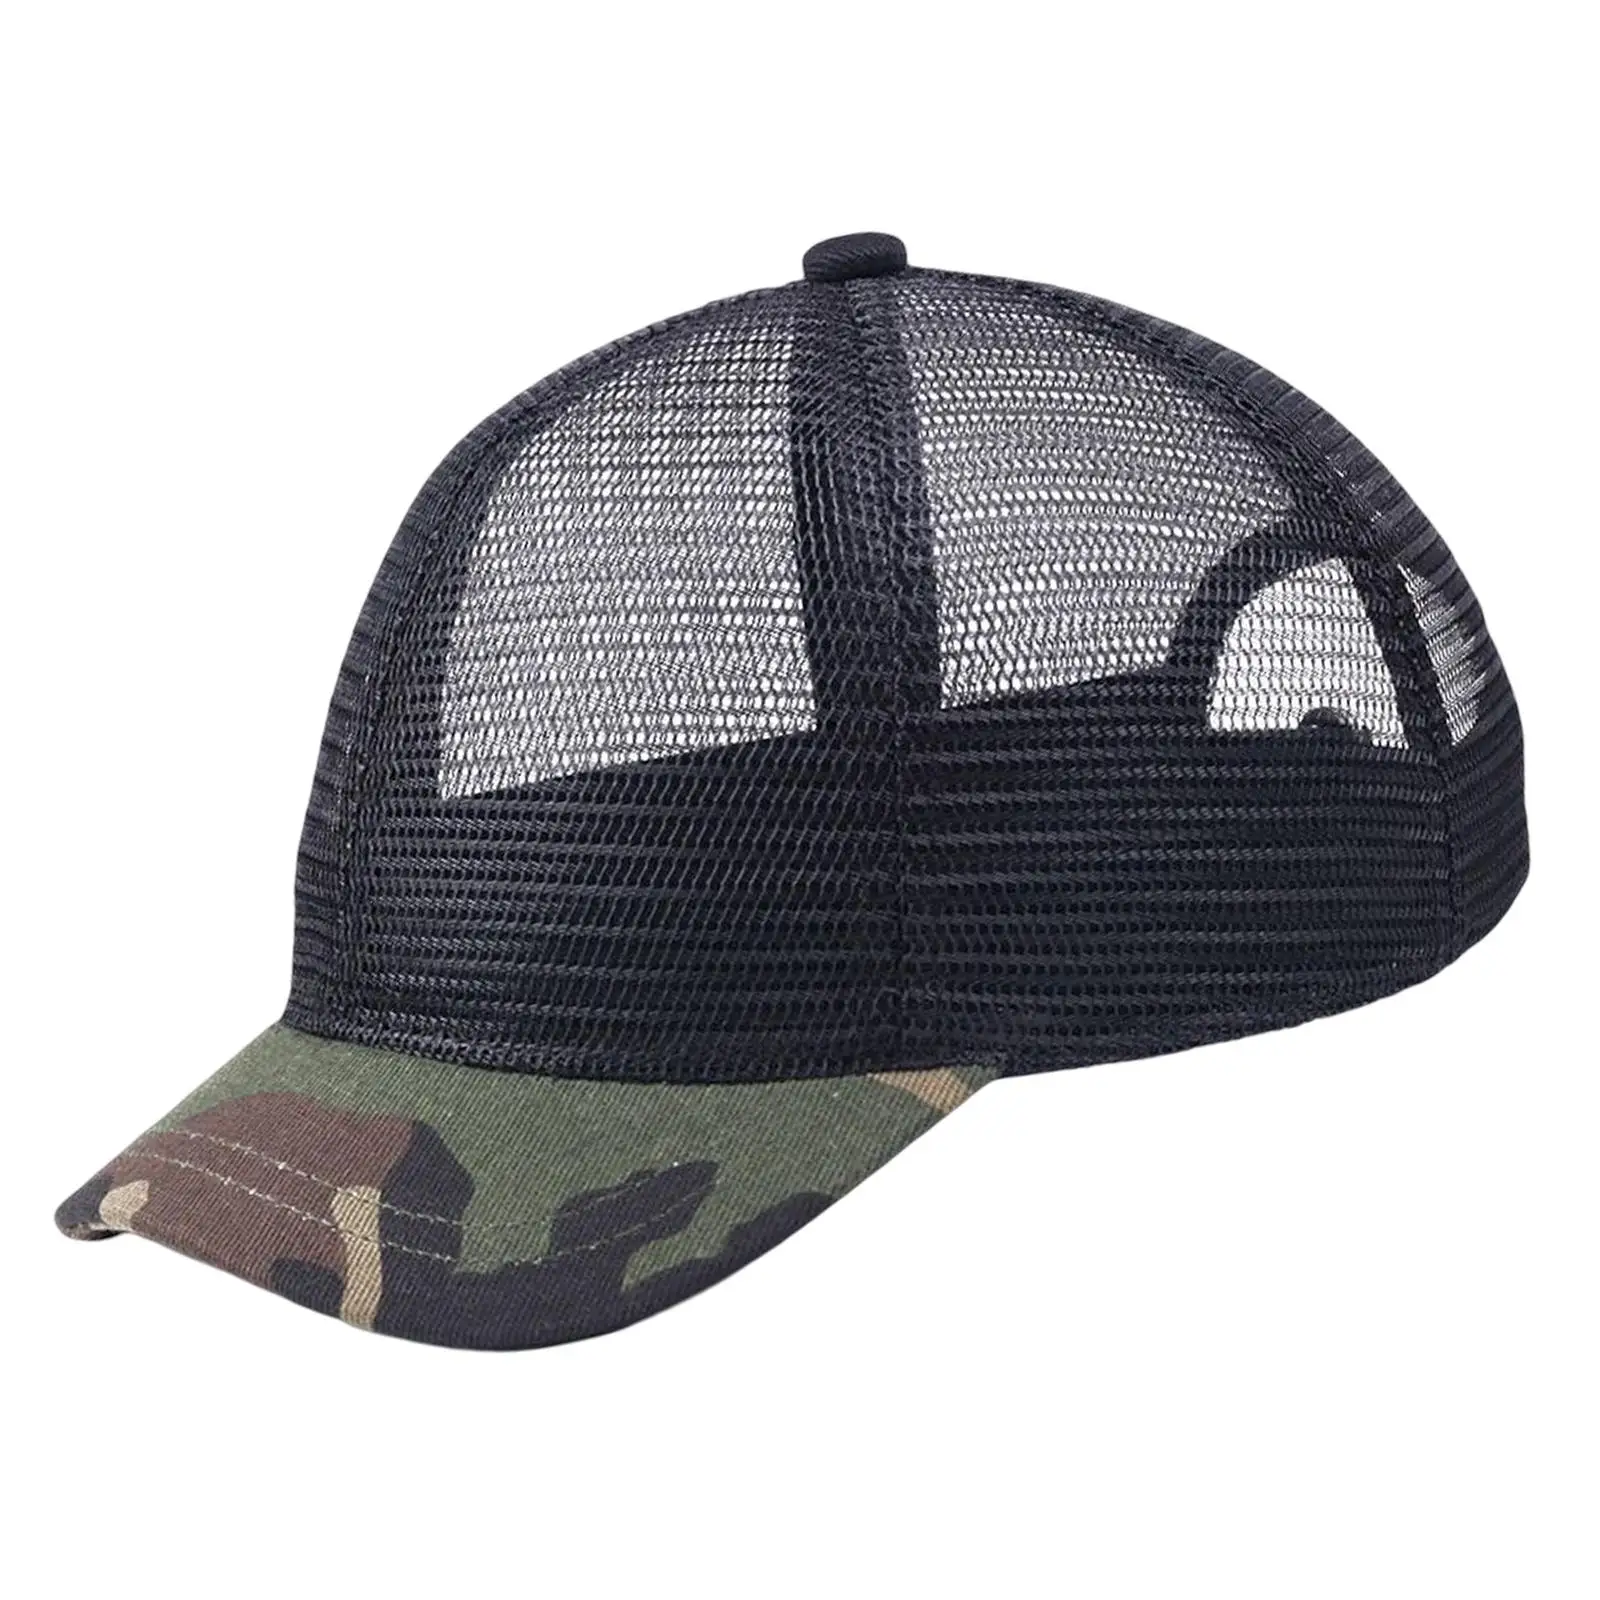 Trucker Hat Snapback Hip Hop Sun Protection Cooling Adjustable Unisex Hats Cotton Mesh Baseball Hat for Jogging Walking Beach